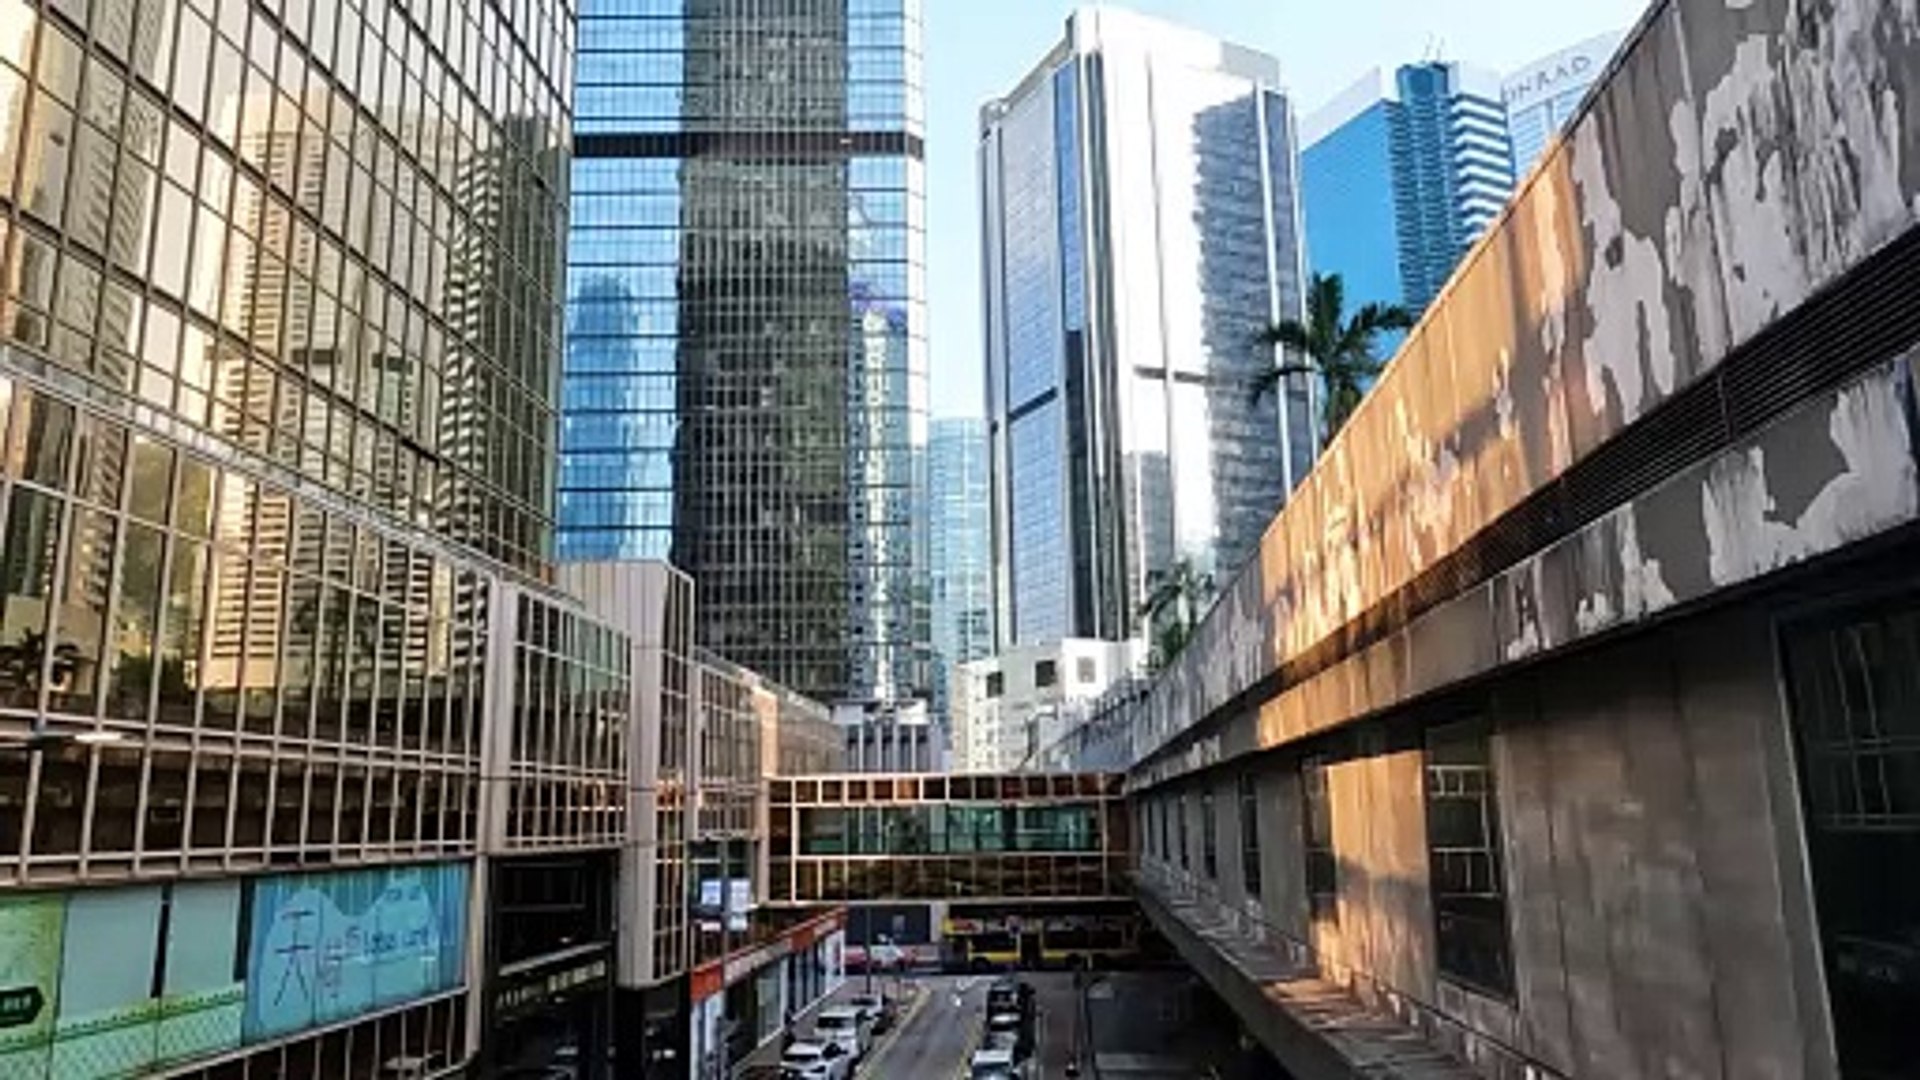 Hong Kong 2023